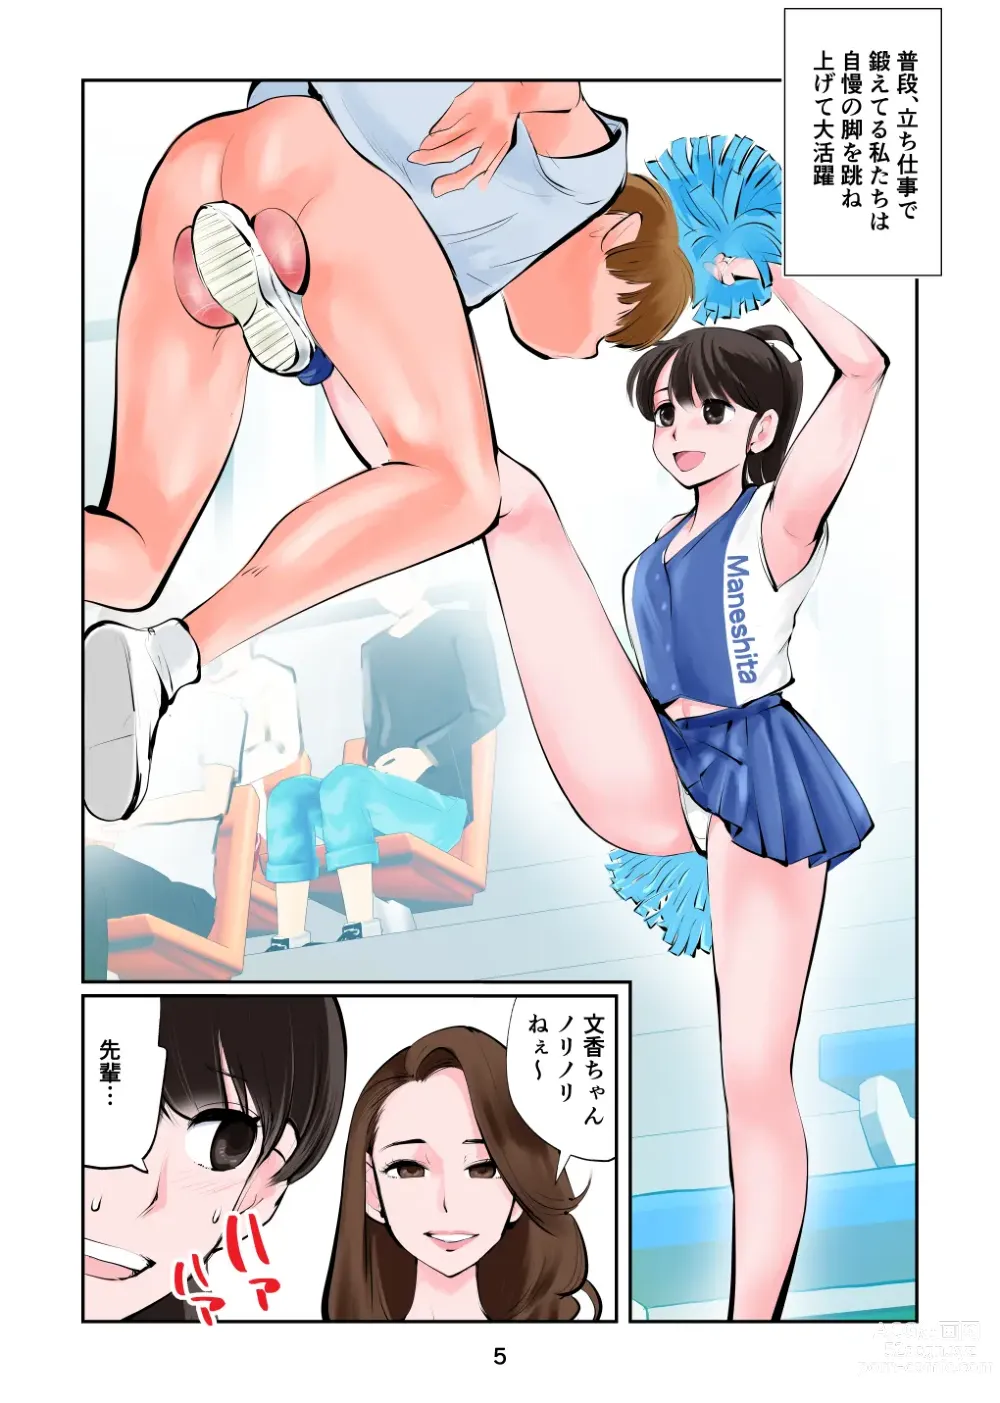 Page 5 of doujinshi Kinkeri Cheer Girl 3